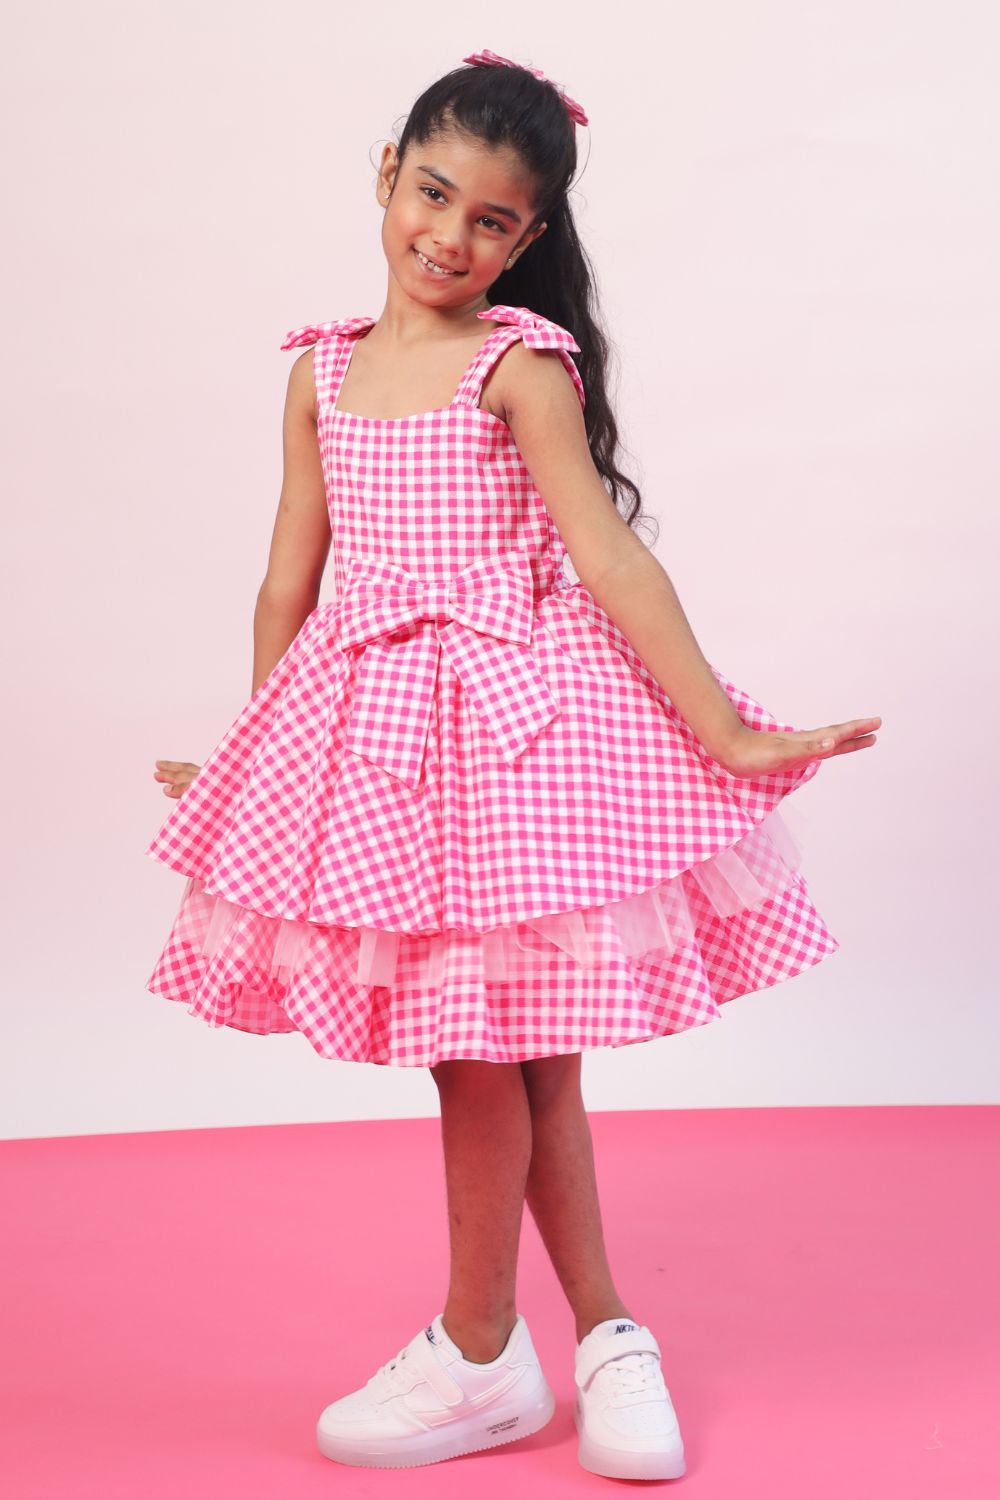 Barbie Pink Dress